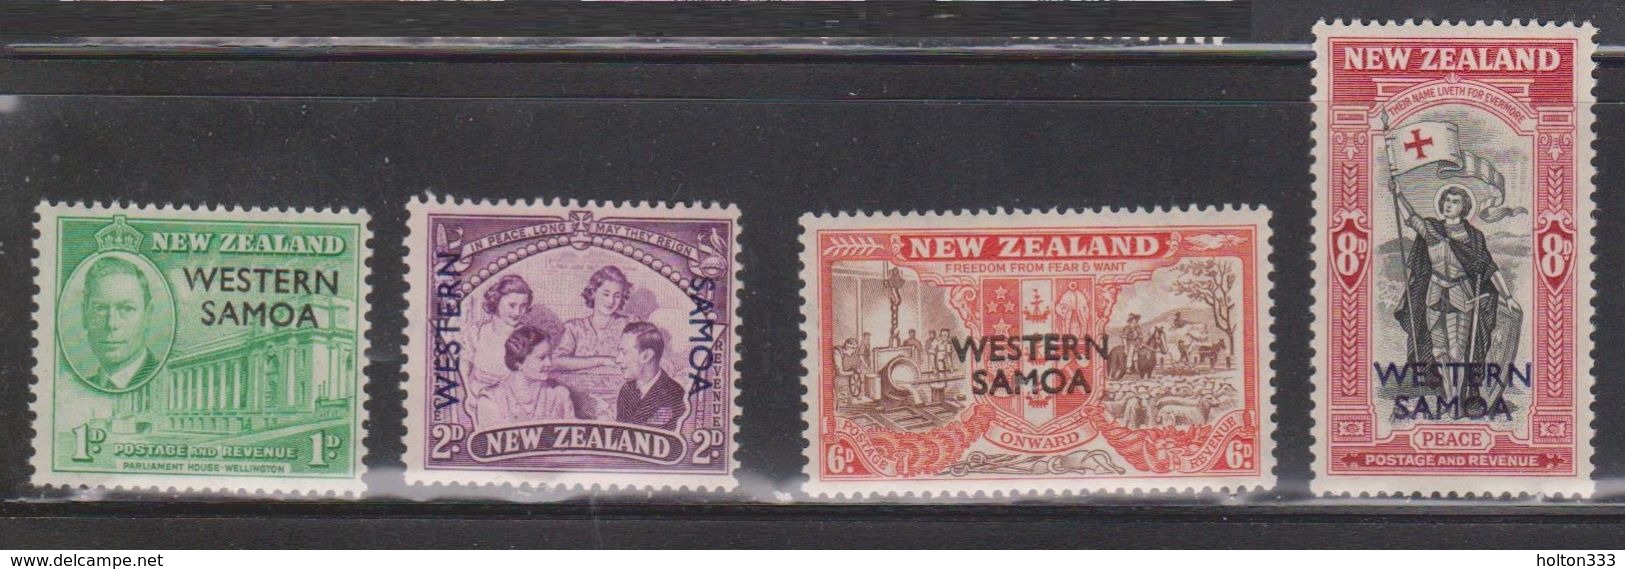 SAMOA Scott # 191-4 MNH & MH - Peace Issue New Zealand Stamps Overprinted - Samoa